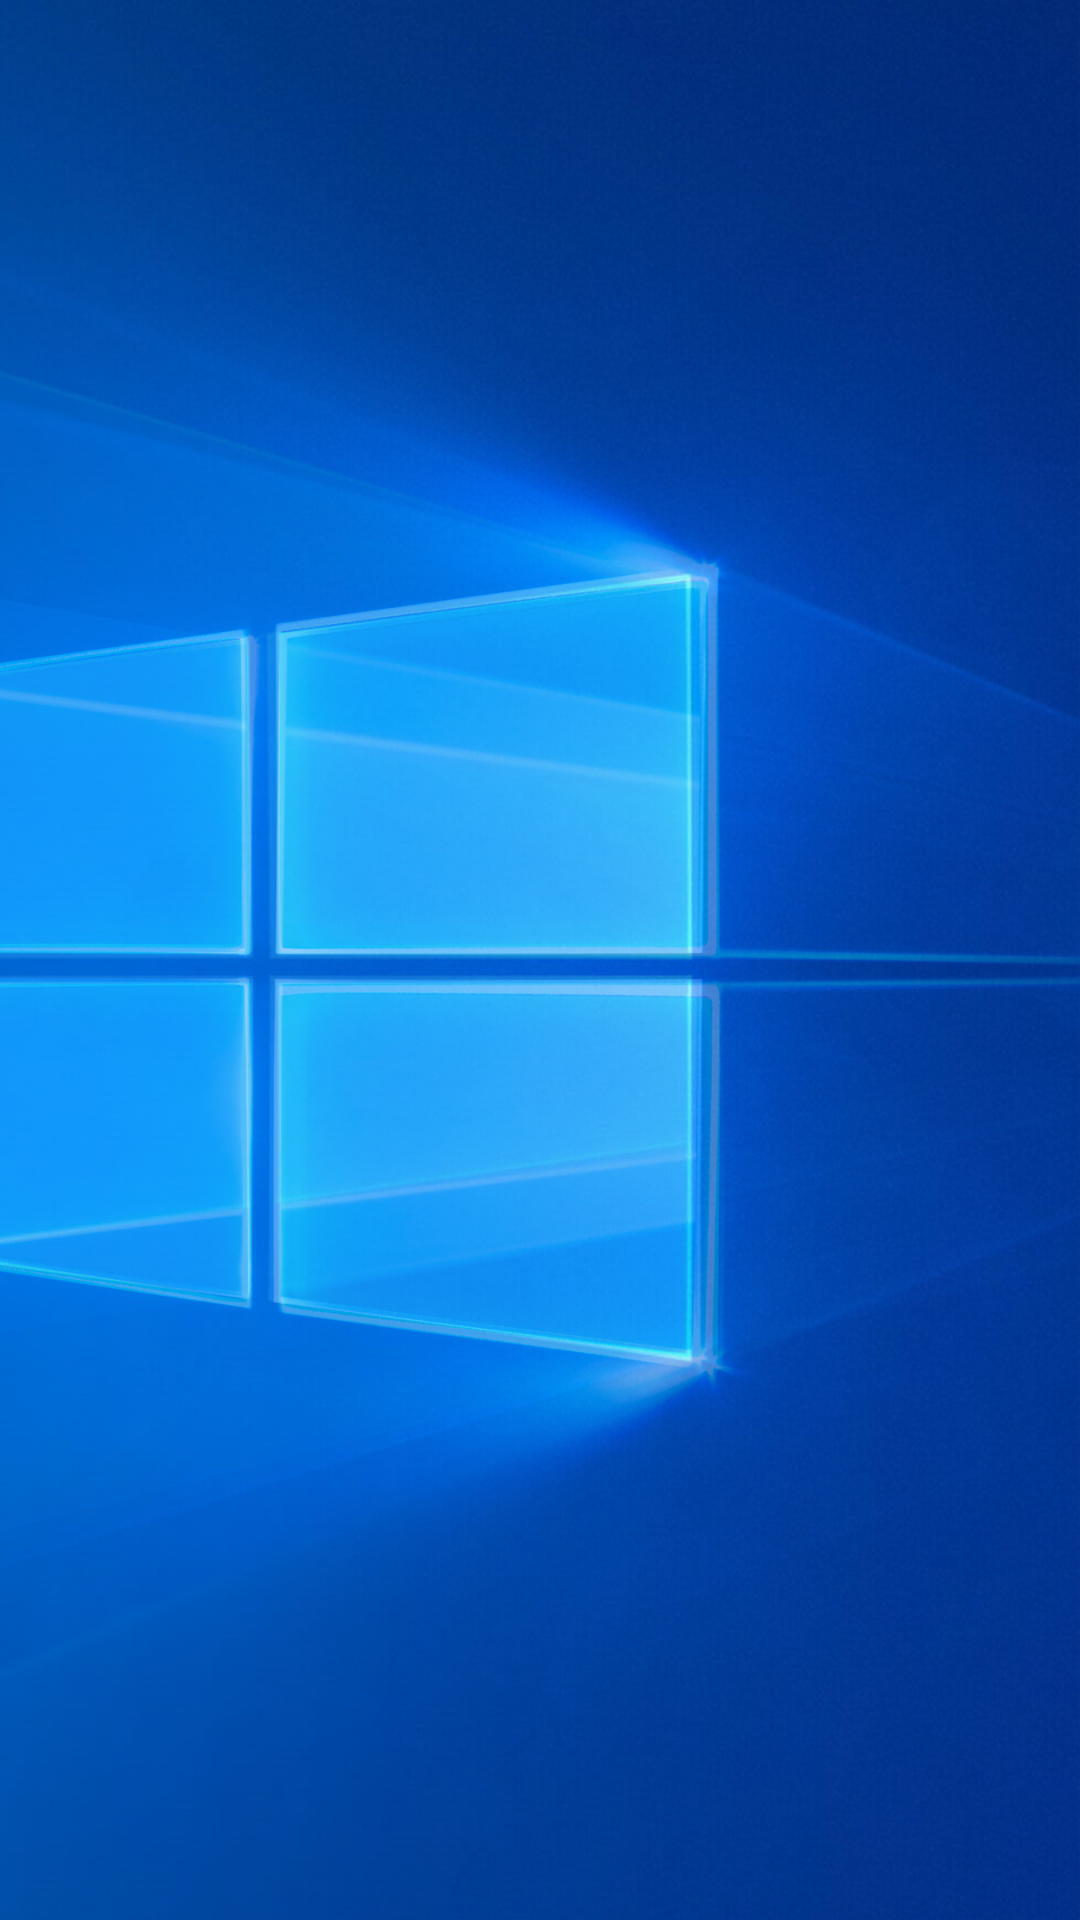 Windows 10 Wallpaper 4K, Windows logo, Glossy, Technology, #2733